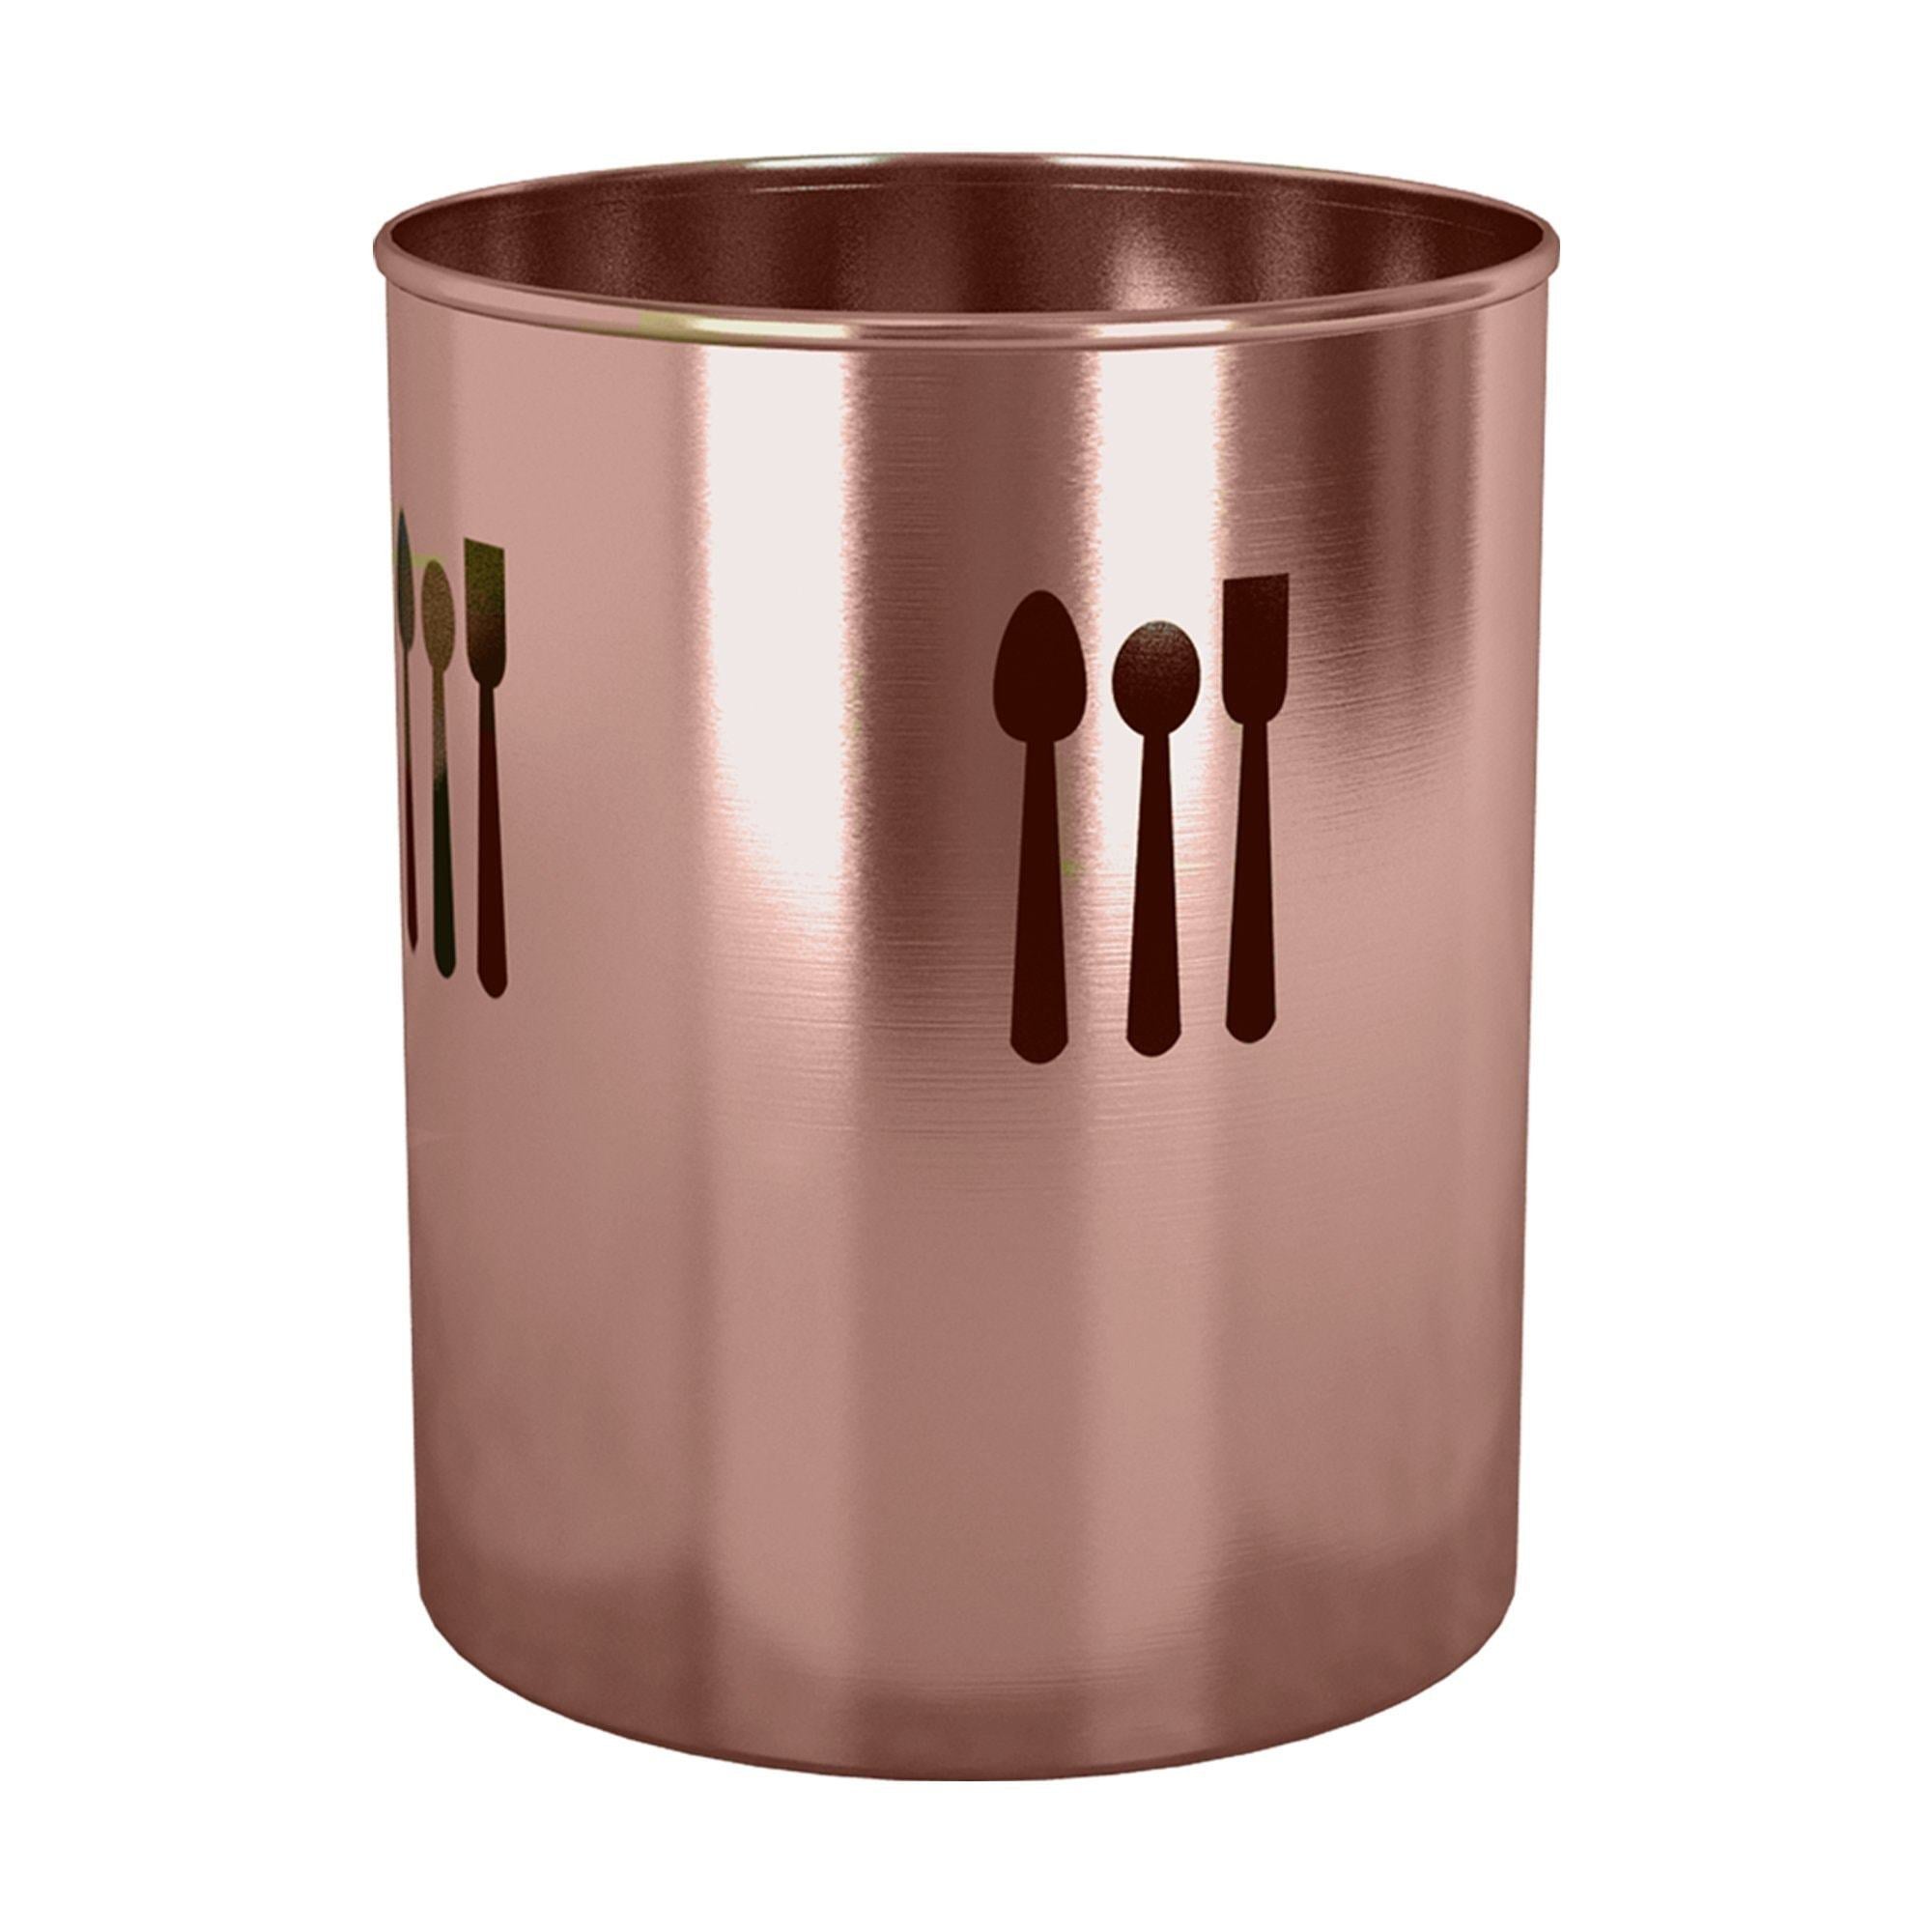 The best nu steel tg uh 16cl utensils holder spoon cutout 4 qtr copper lacquered 7 5 h x 7 5 w x 7 5 d copper color